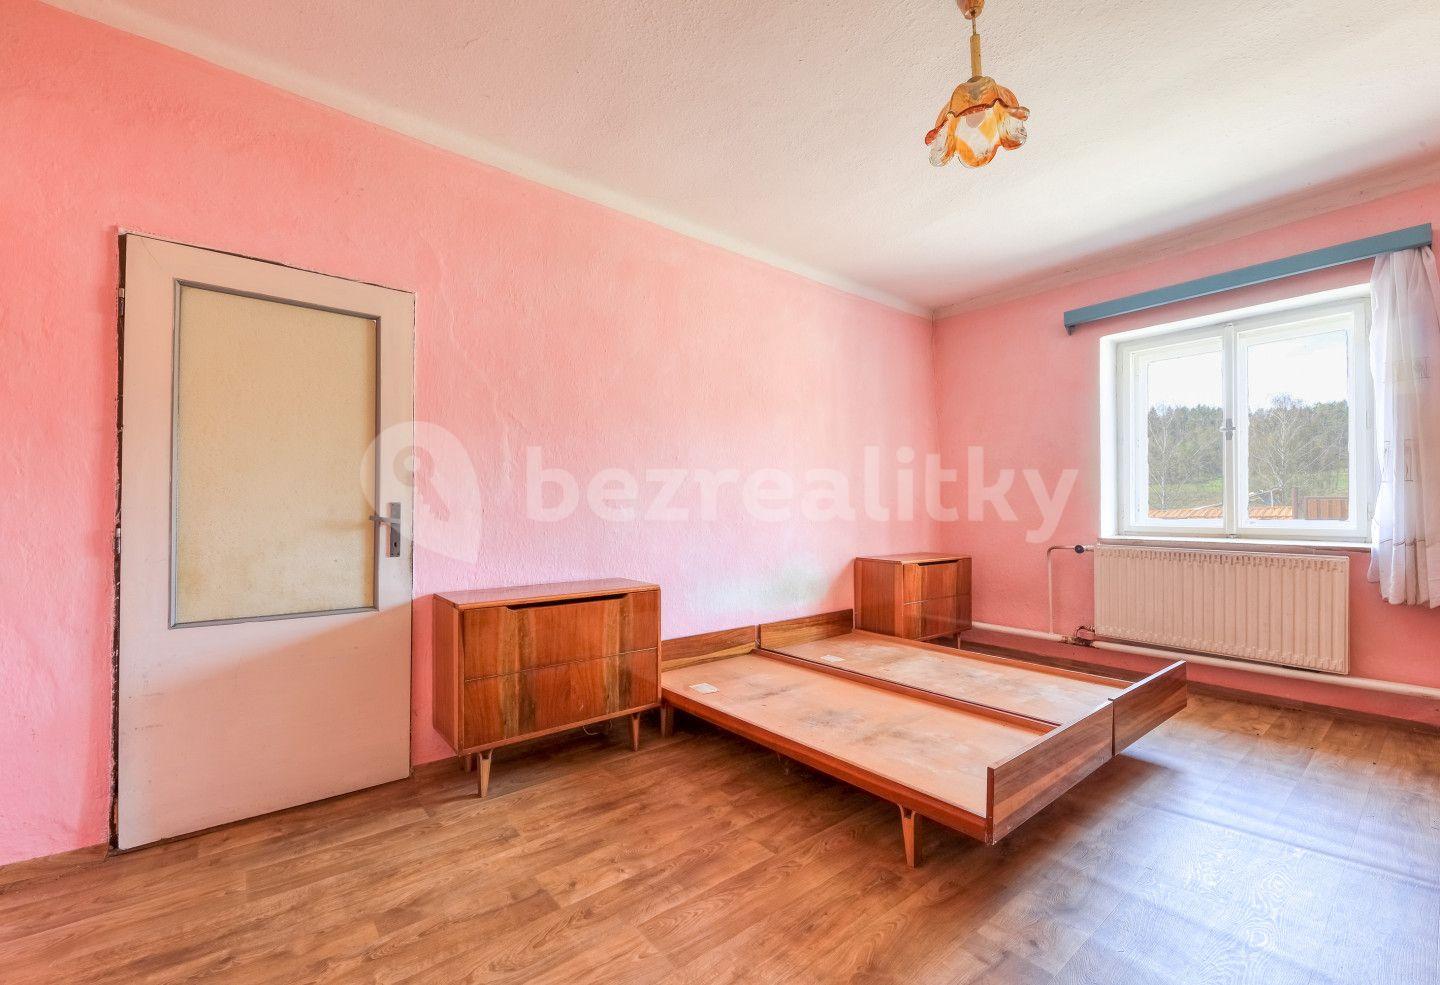 Prodej domu 192 m², pozemek 512 m², Horažďovice, Plzeňský kraj